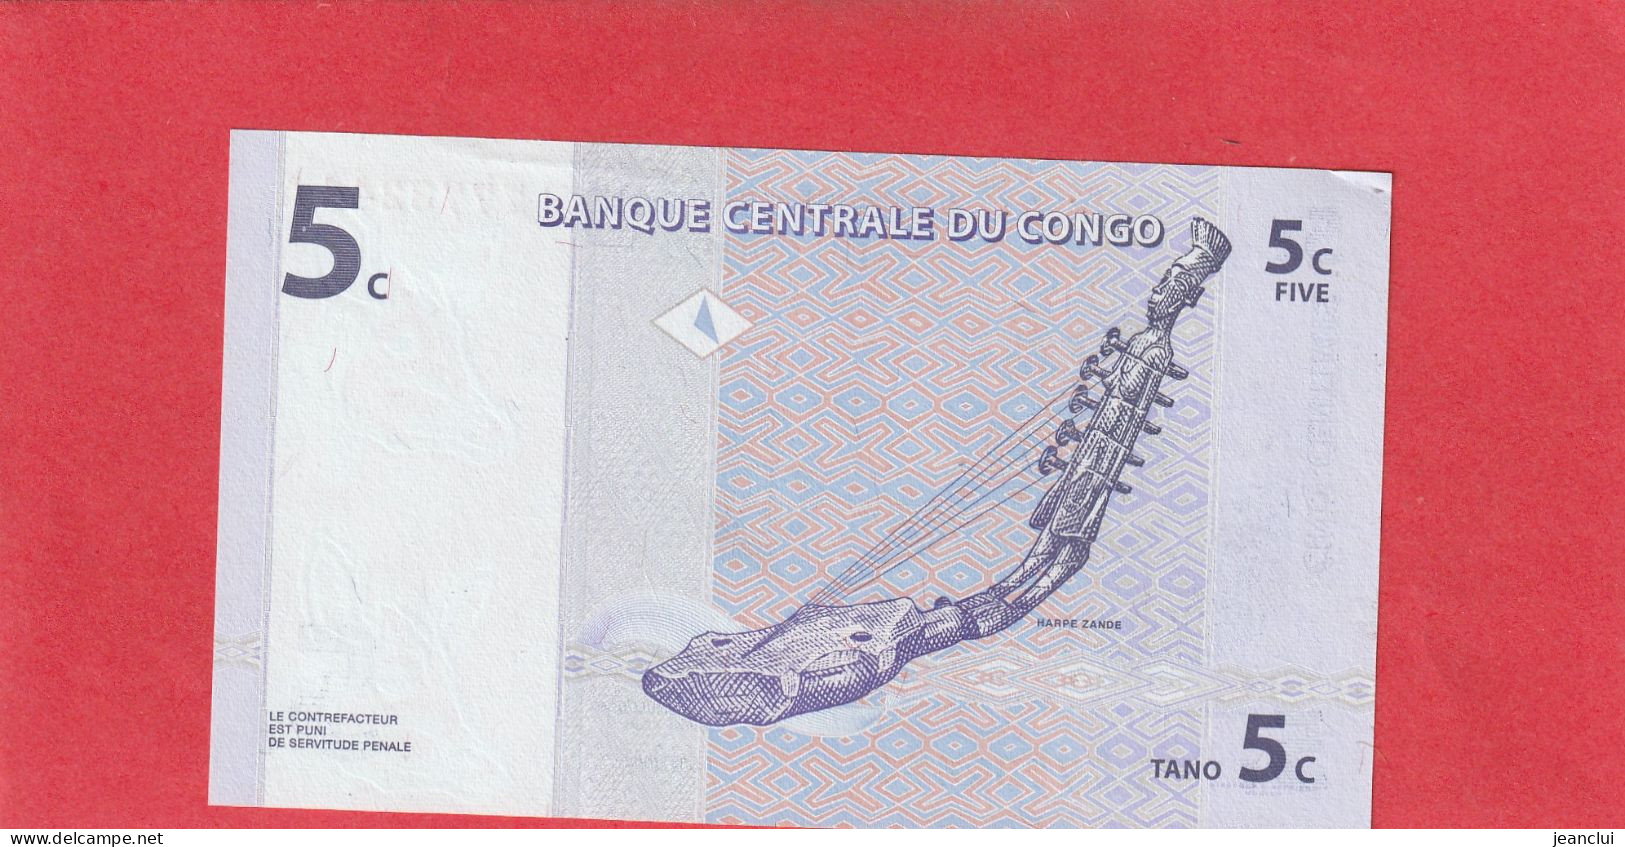 BANQUE CENTRALE DU CONGO  .  5 CENTIMES  .  01-11-1997  .  N°  B 7773244 A  .  BILLET EN TRES BEL ETAT  .  2 SCANNES - Democratische Republiek Congo & Zaire